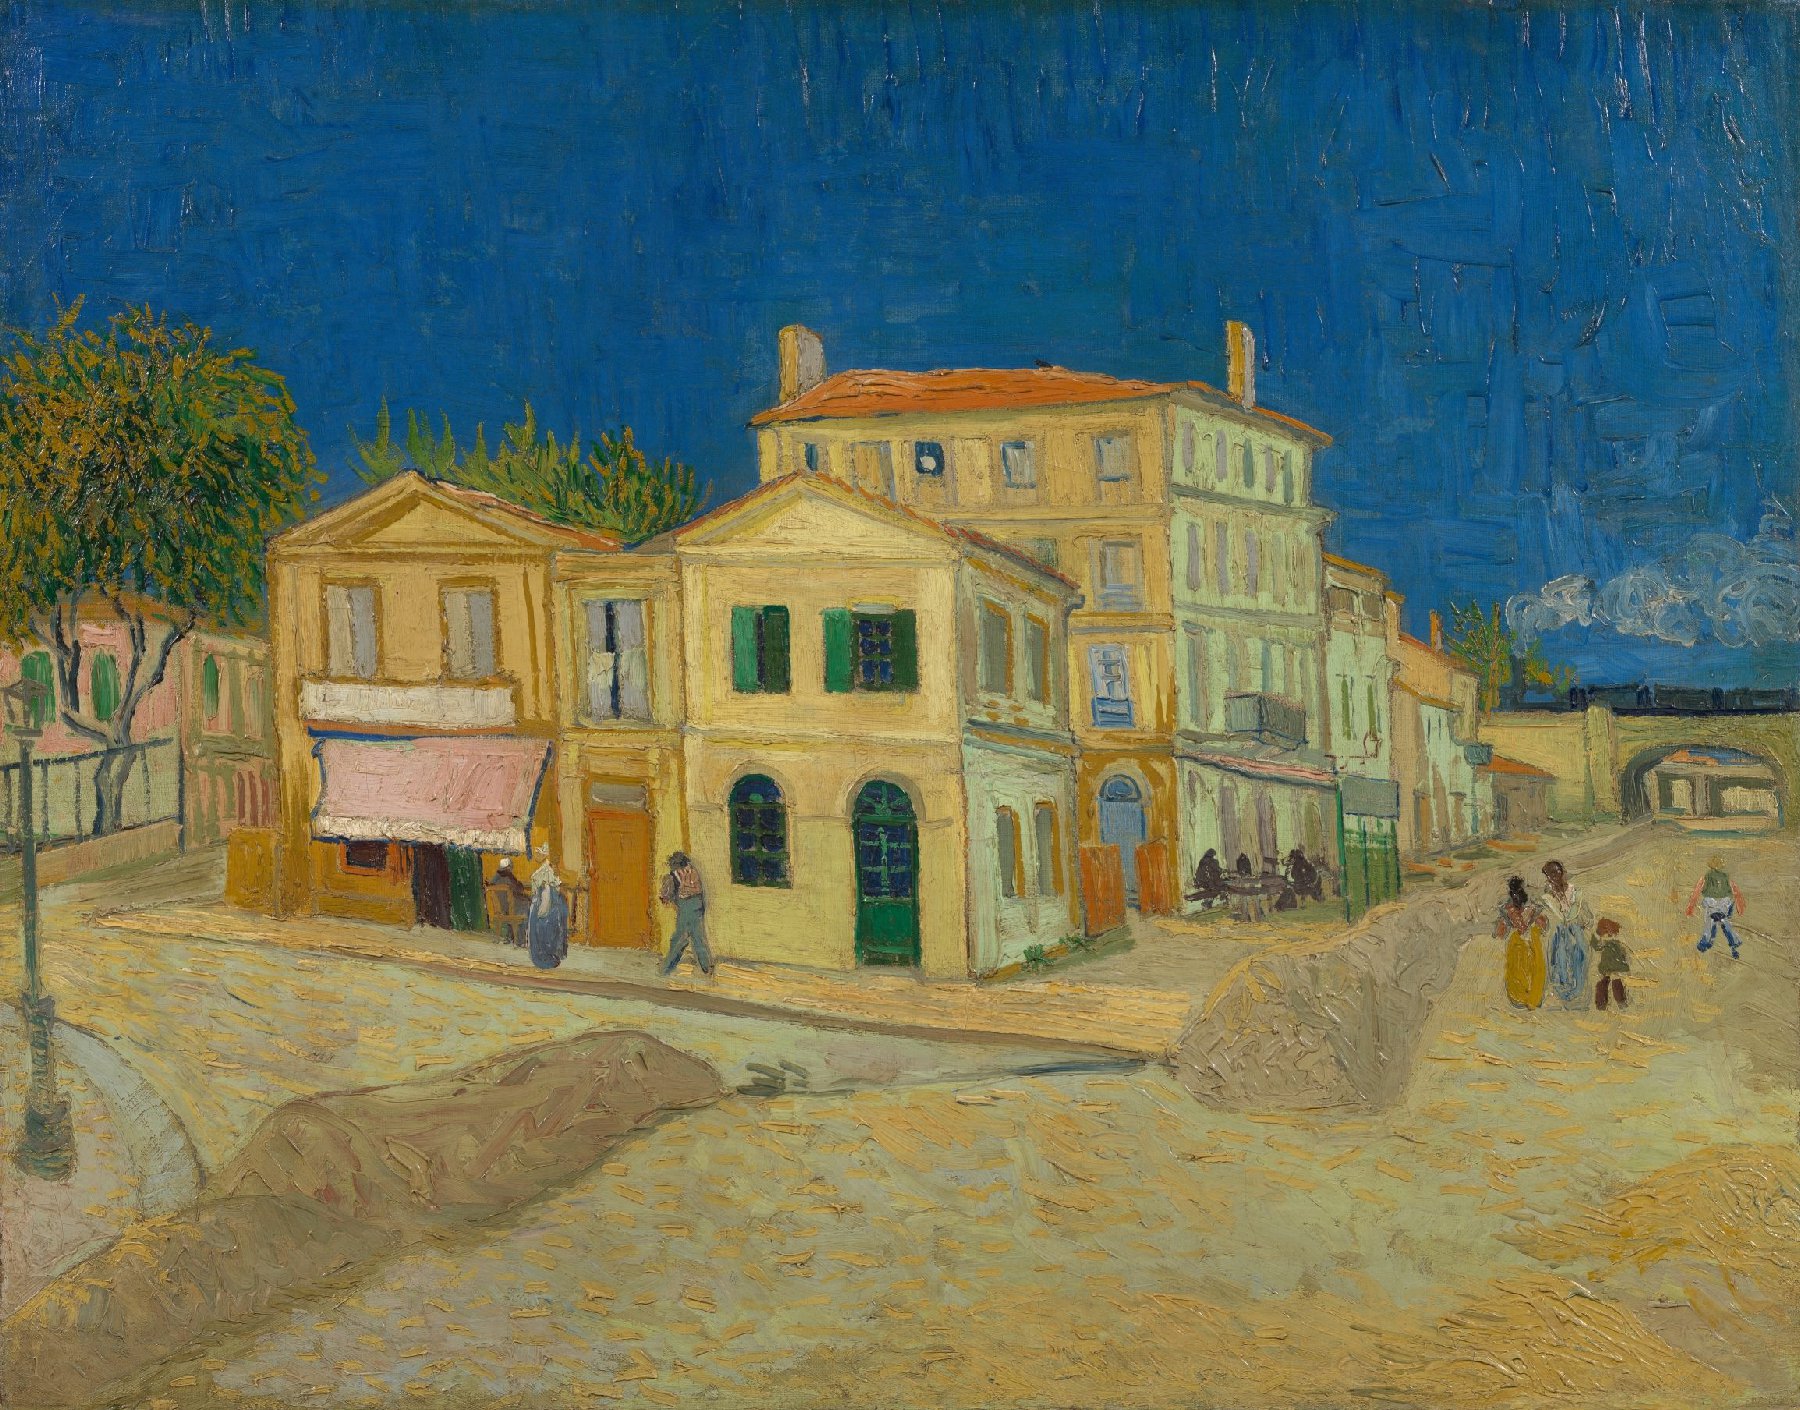 Het Gele Huis (De straat) Vincent van Gogh (1853 - 1890), Arles, september 1888